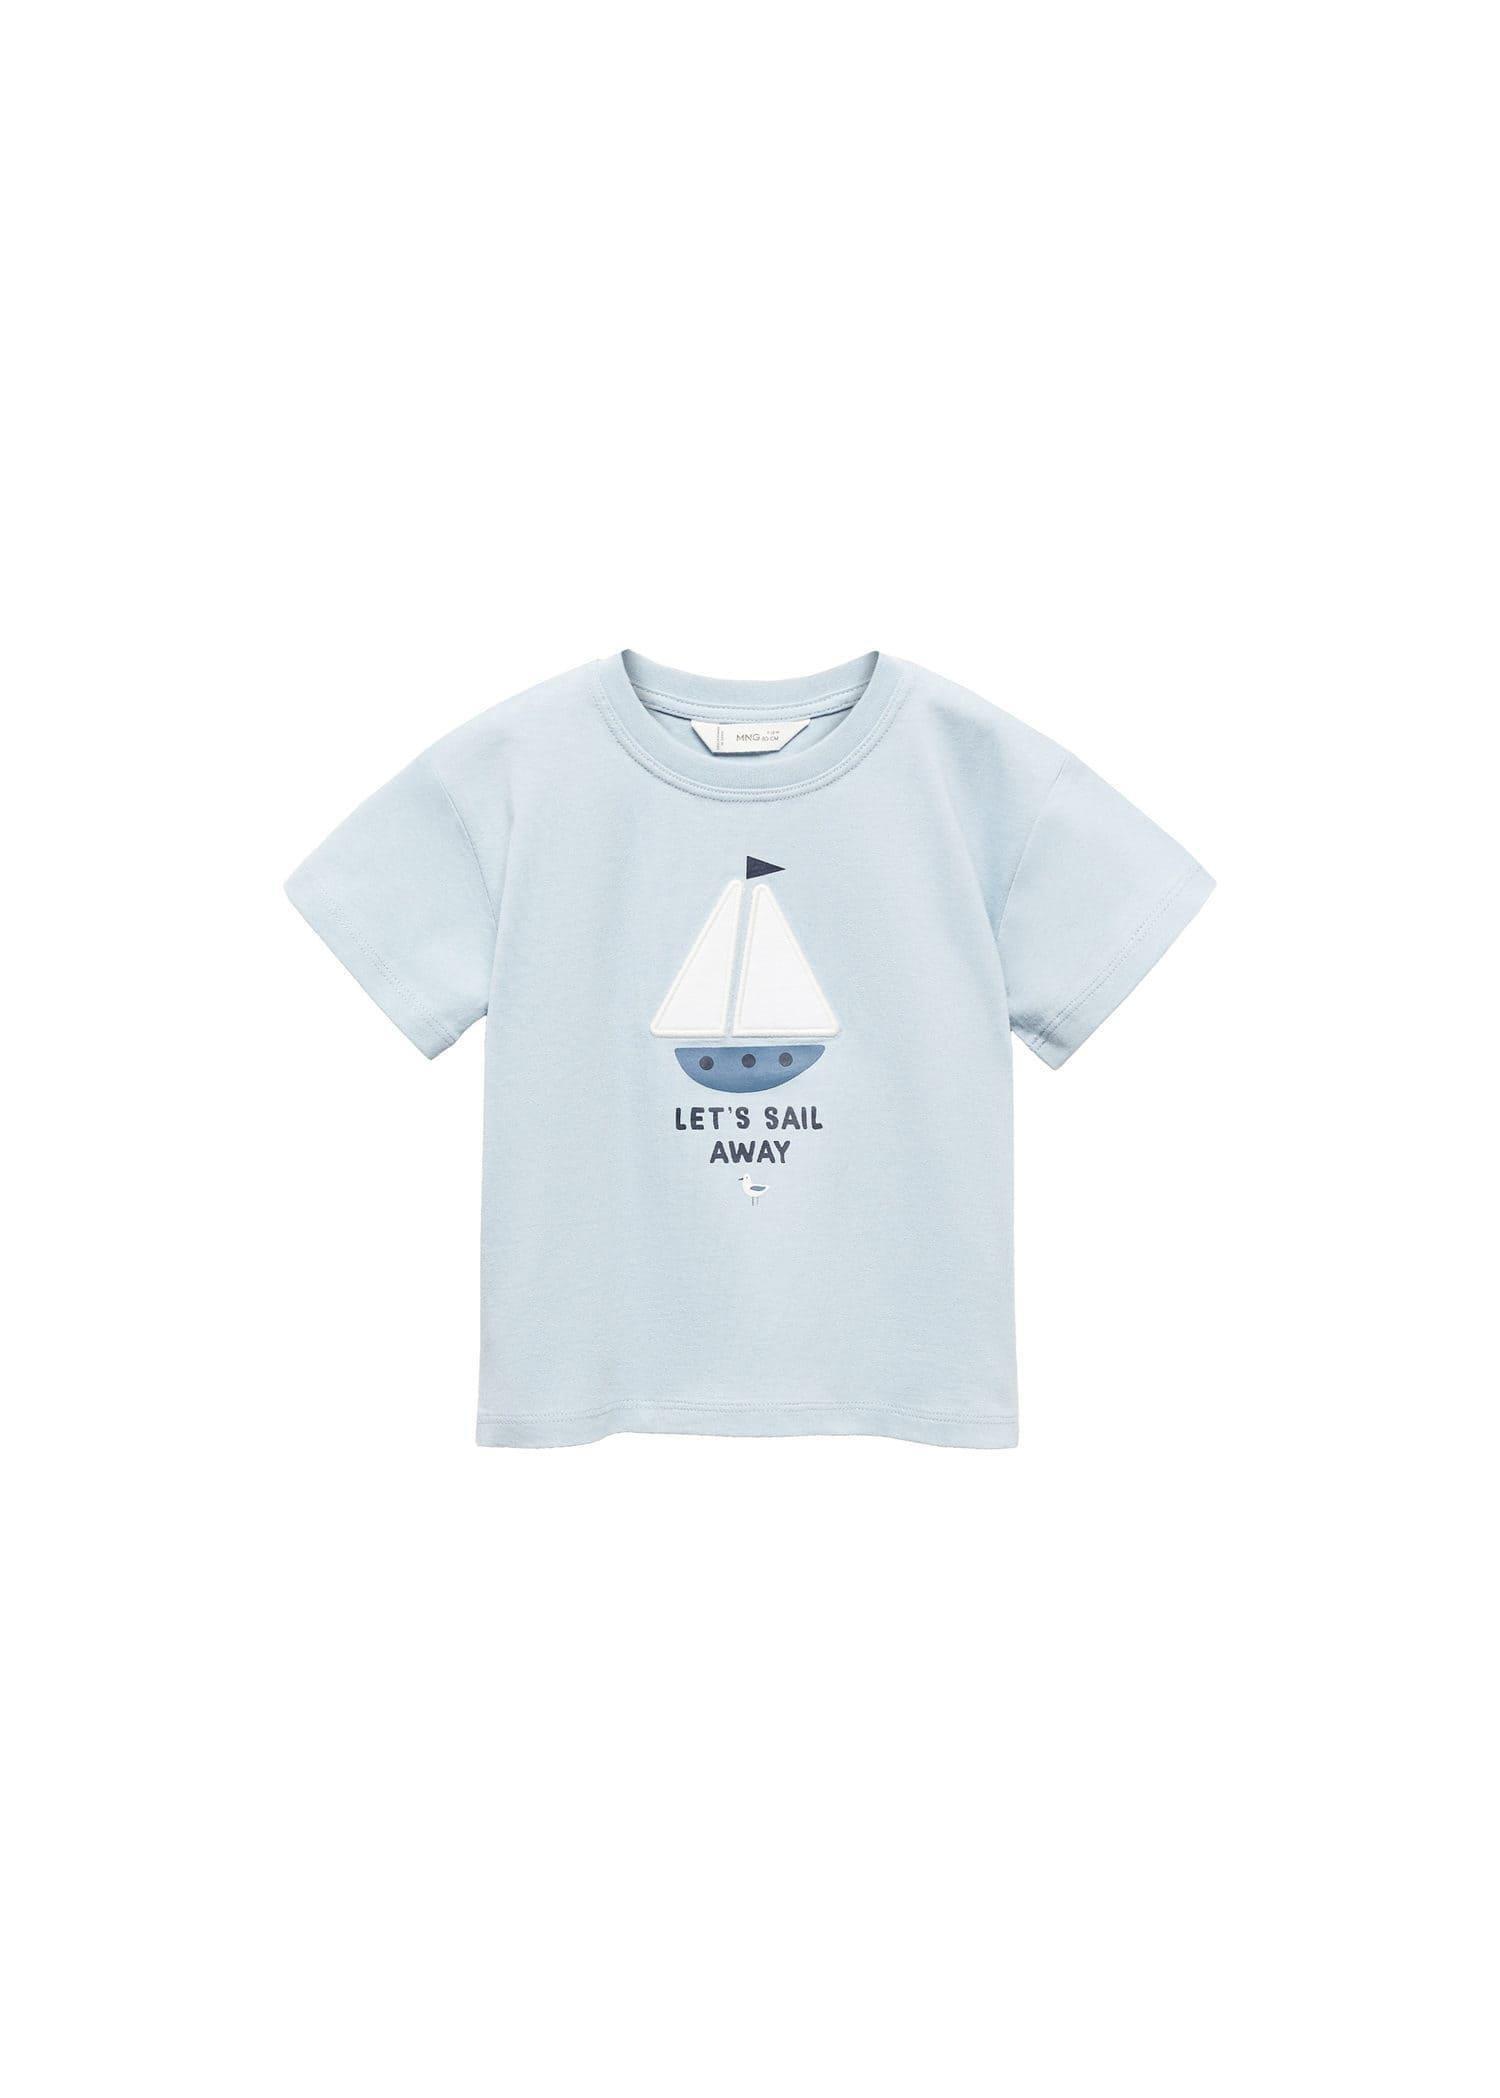 Mango - Blue Embroidered T-Shirt, Kids Boys